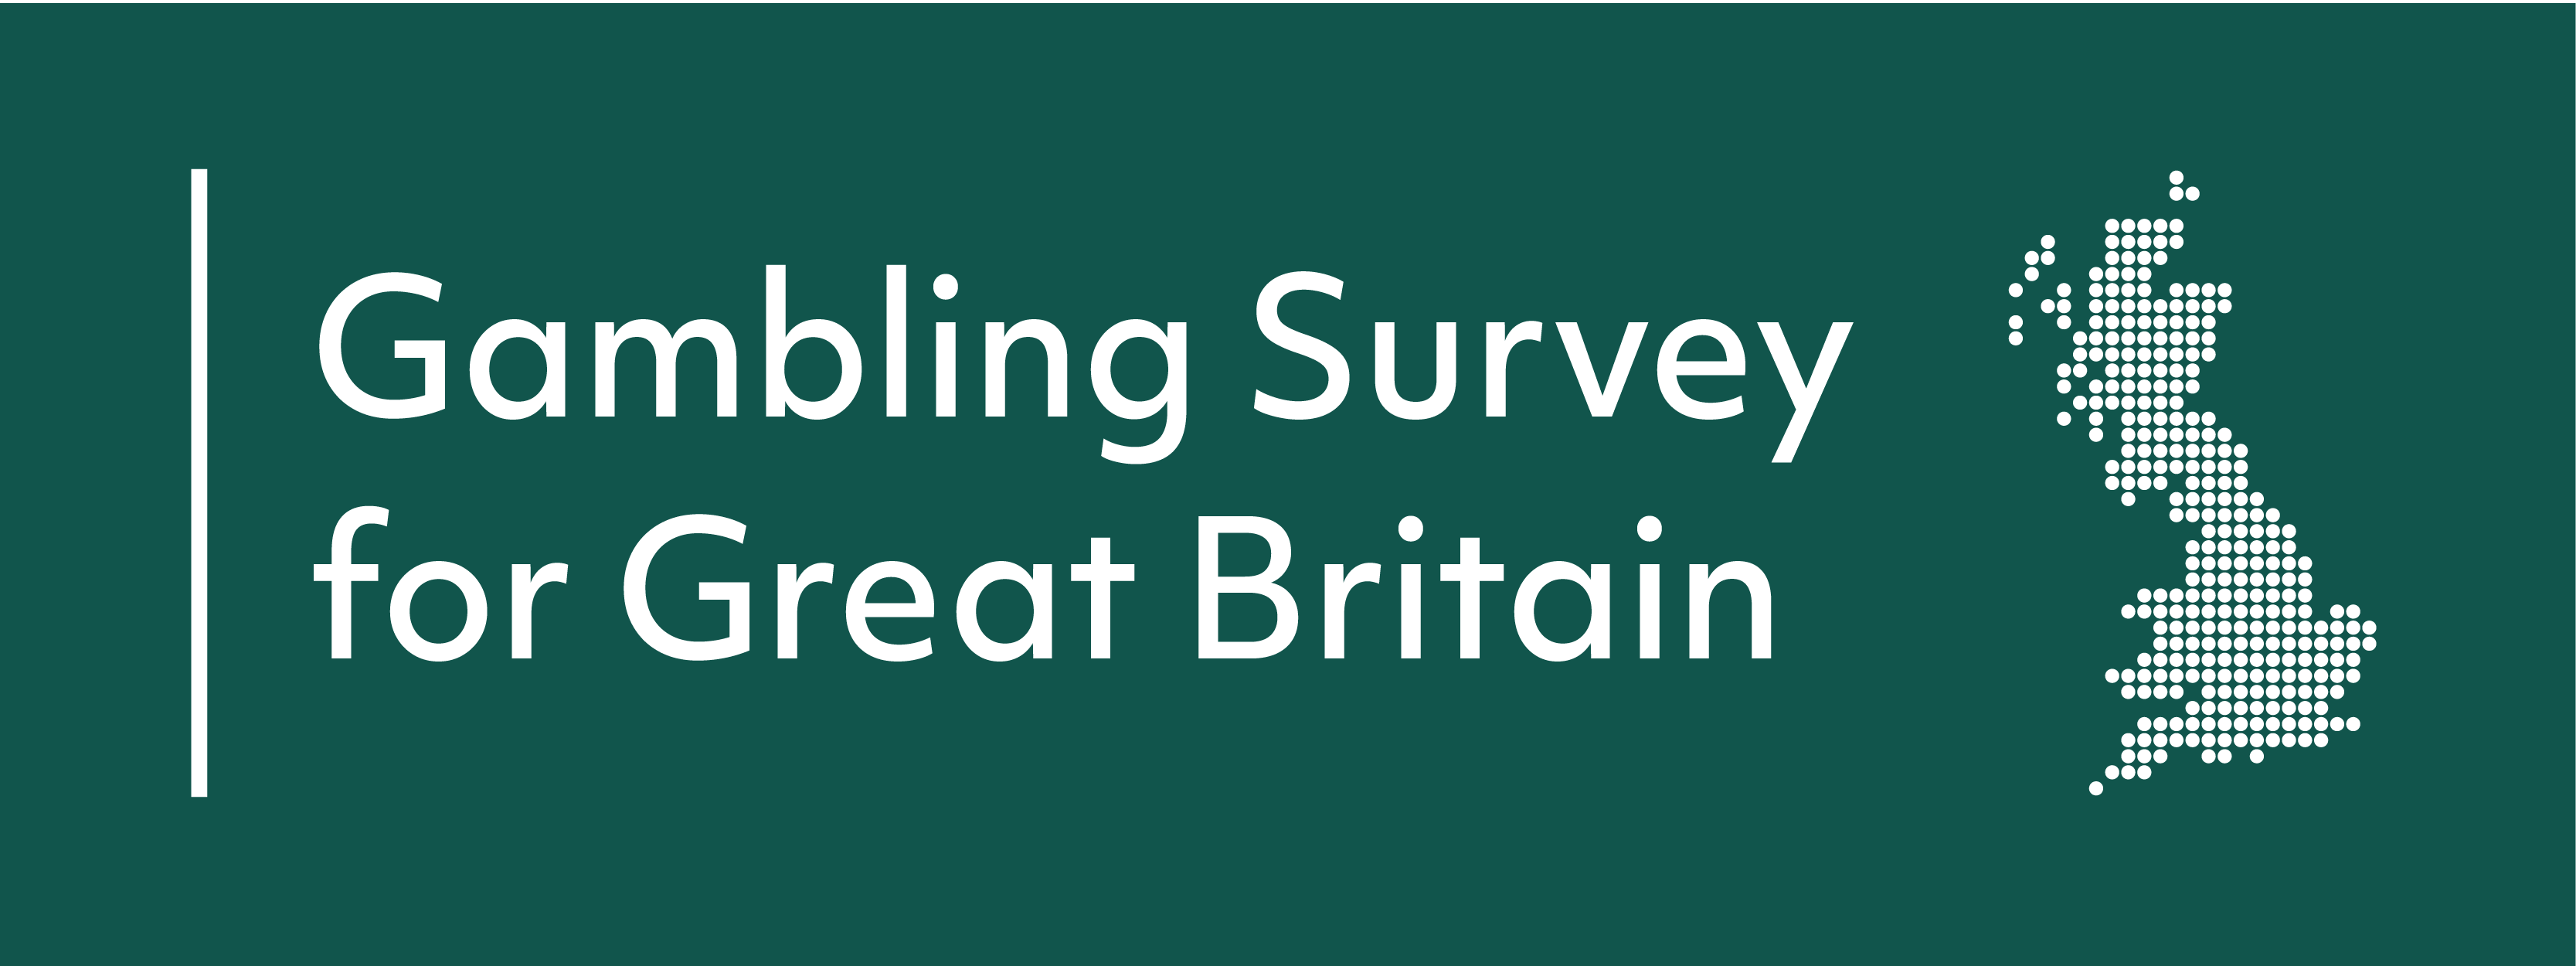 Gambling Survey for Great Britain logo